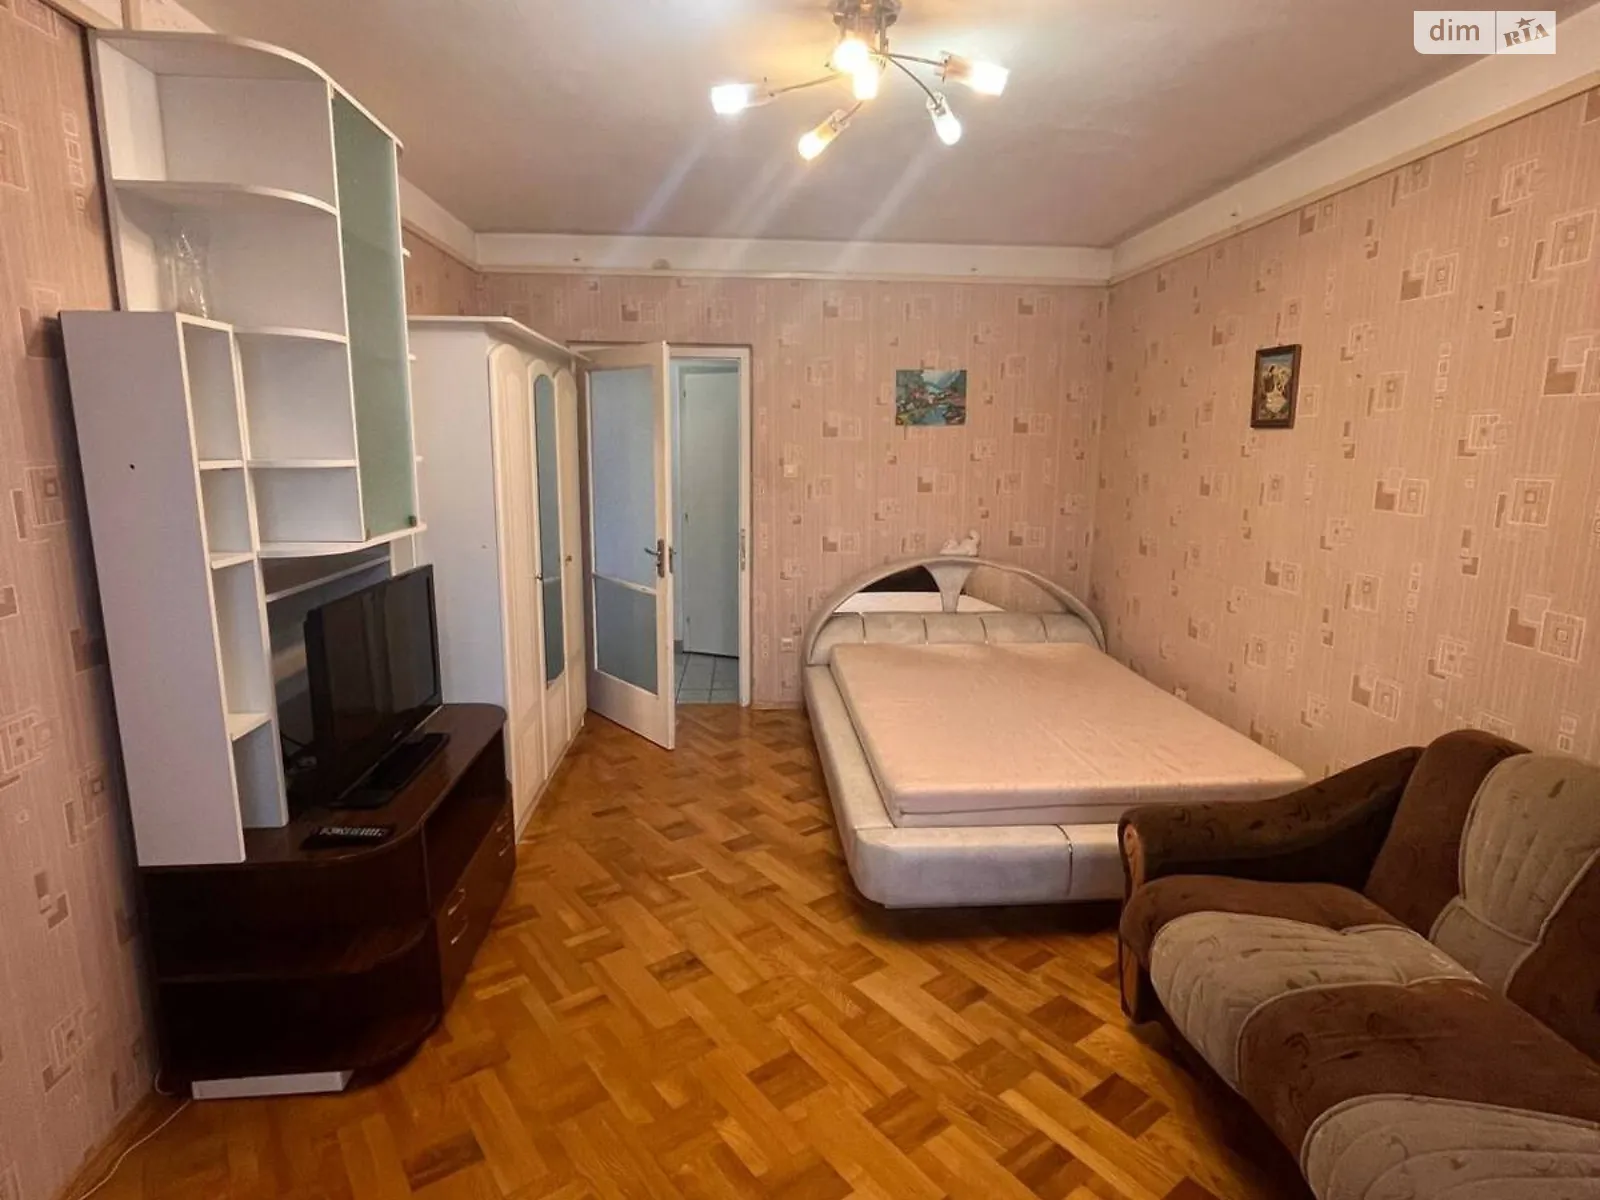 Сдается в аренду 2-комнатная квартира 68 кв. м в Ивано-Франковске - фото 3